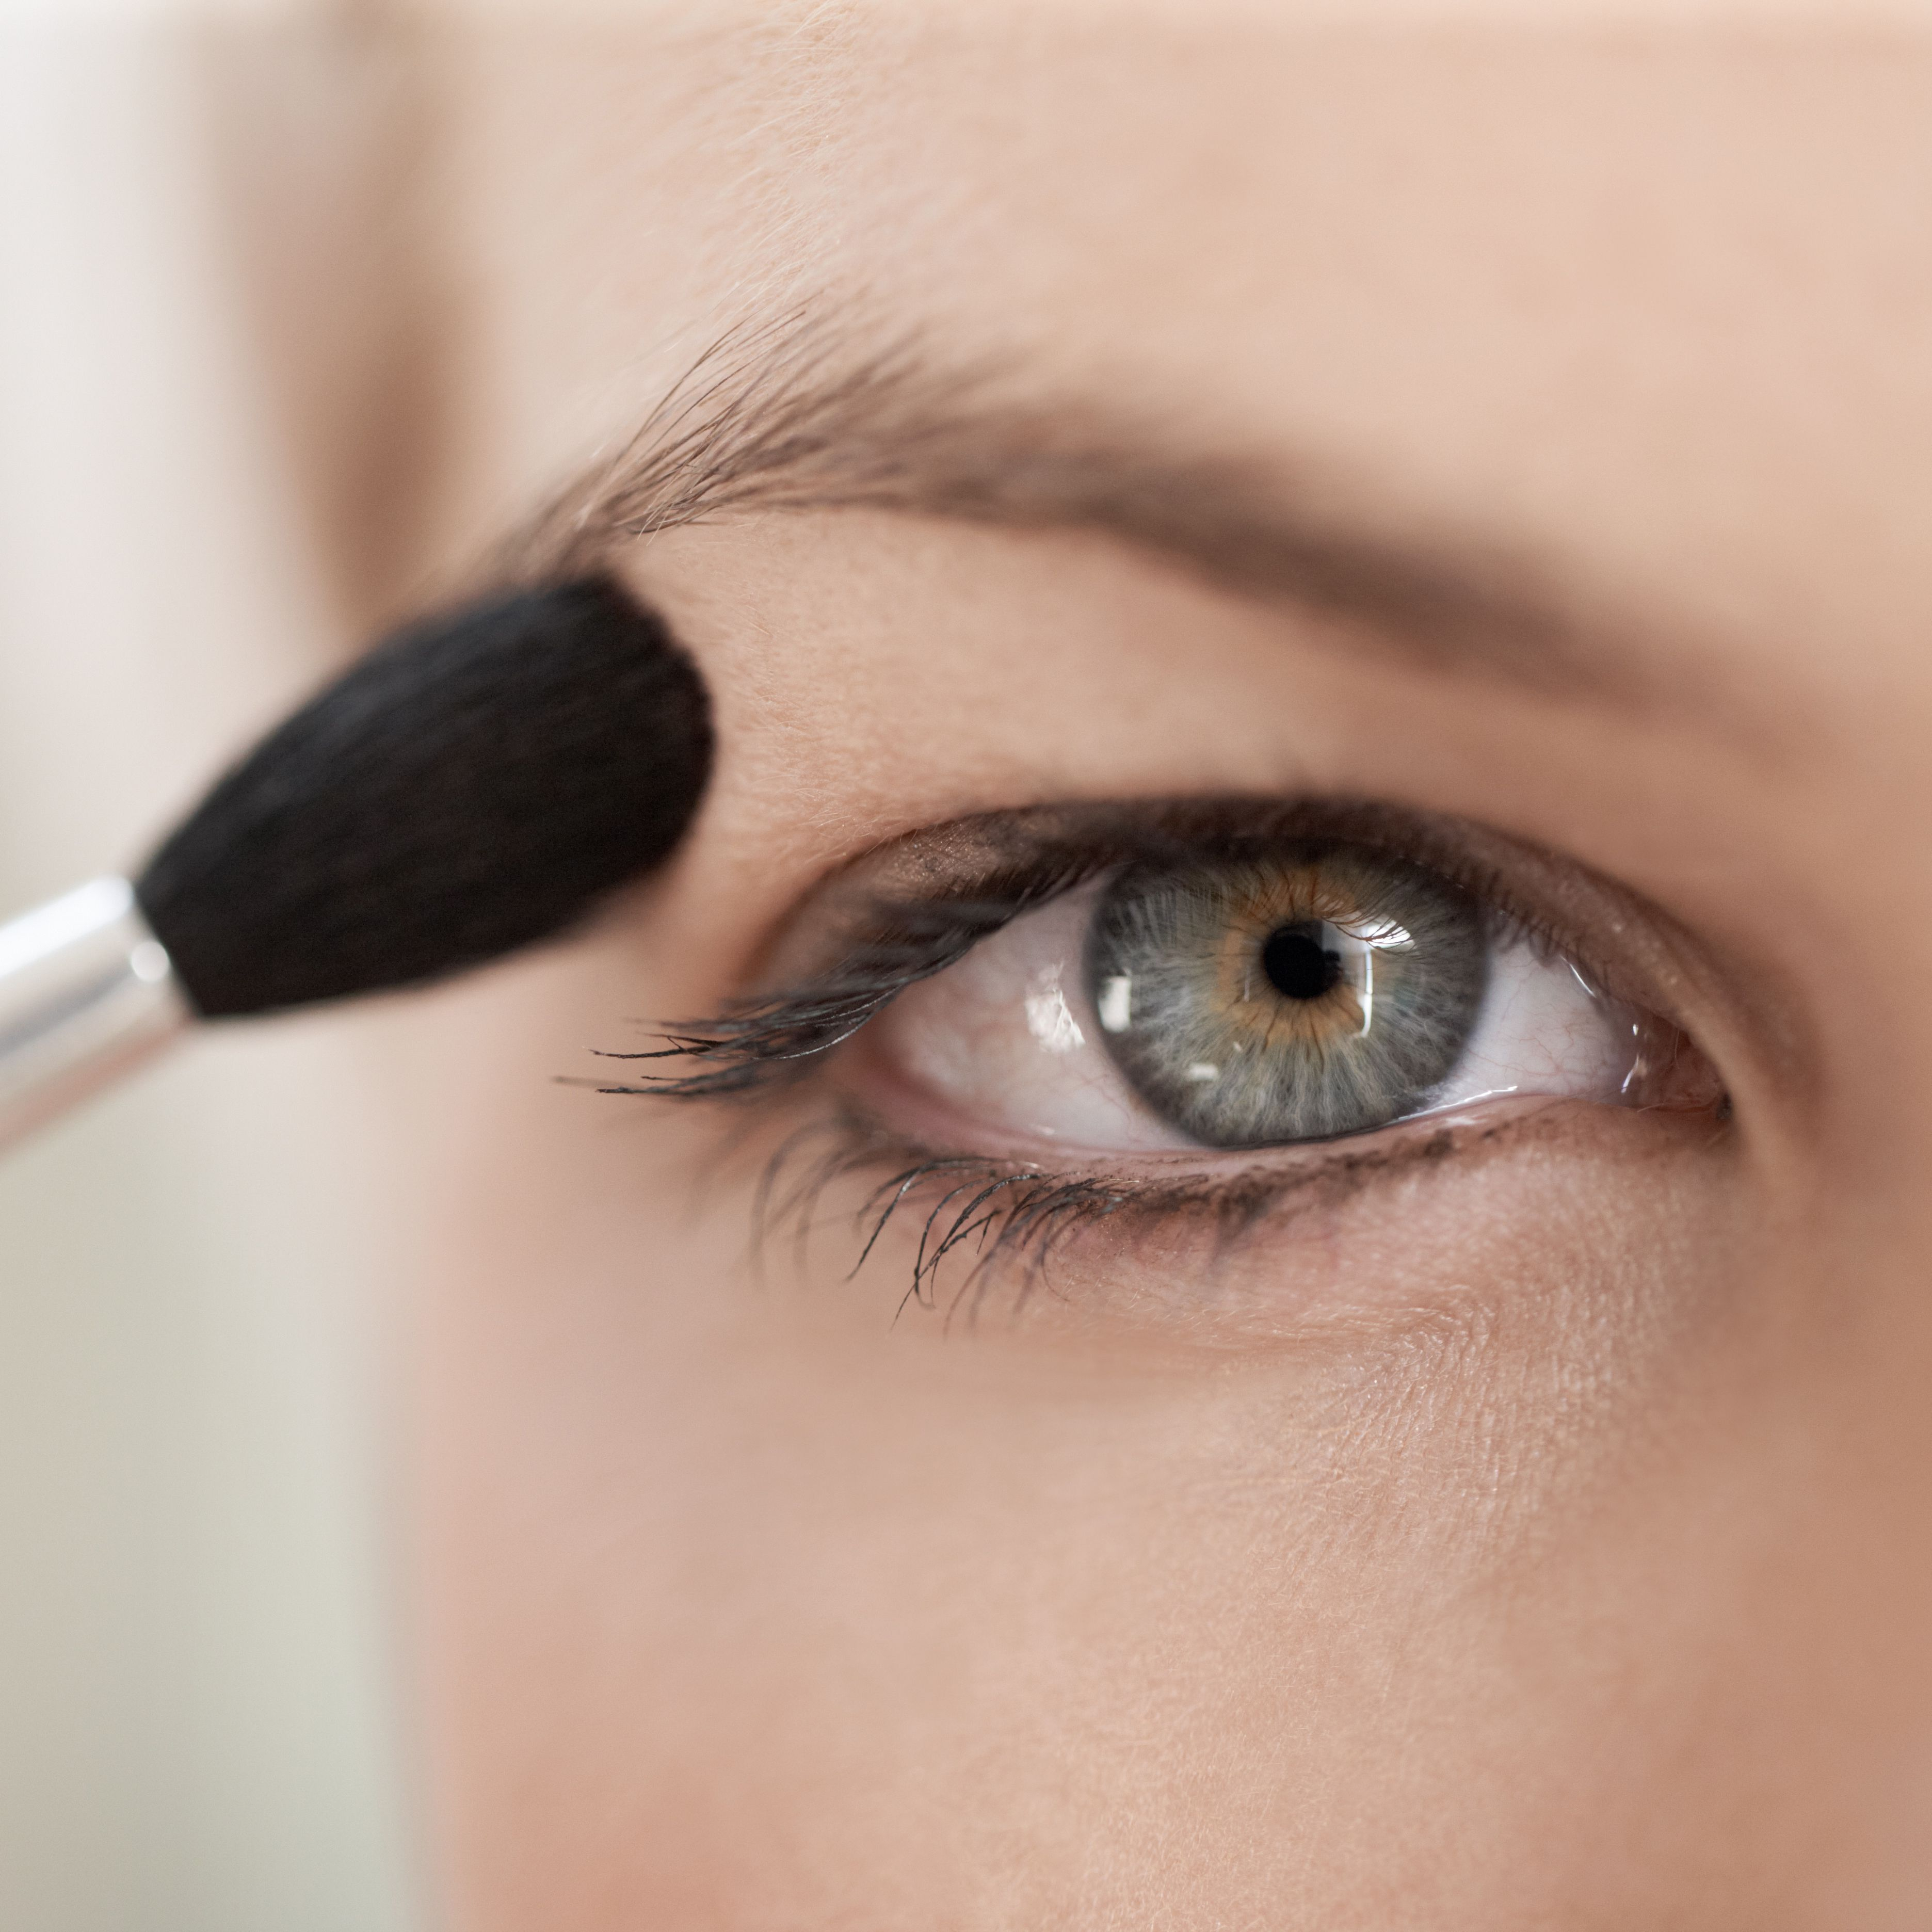 Hooded Eyes Makeup Makeup Tricks For Hooded Eyes Hooded Eyes Makeup Tips And Tricks